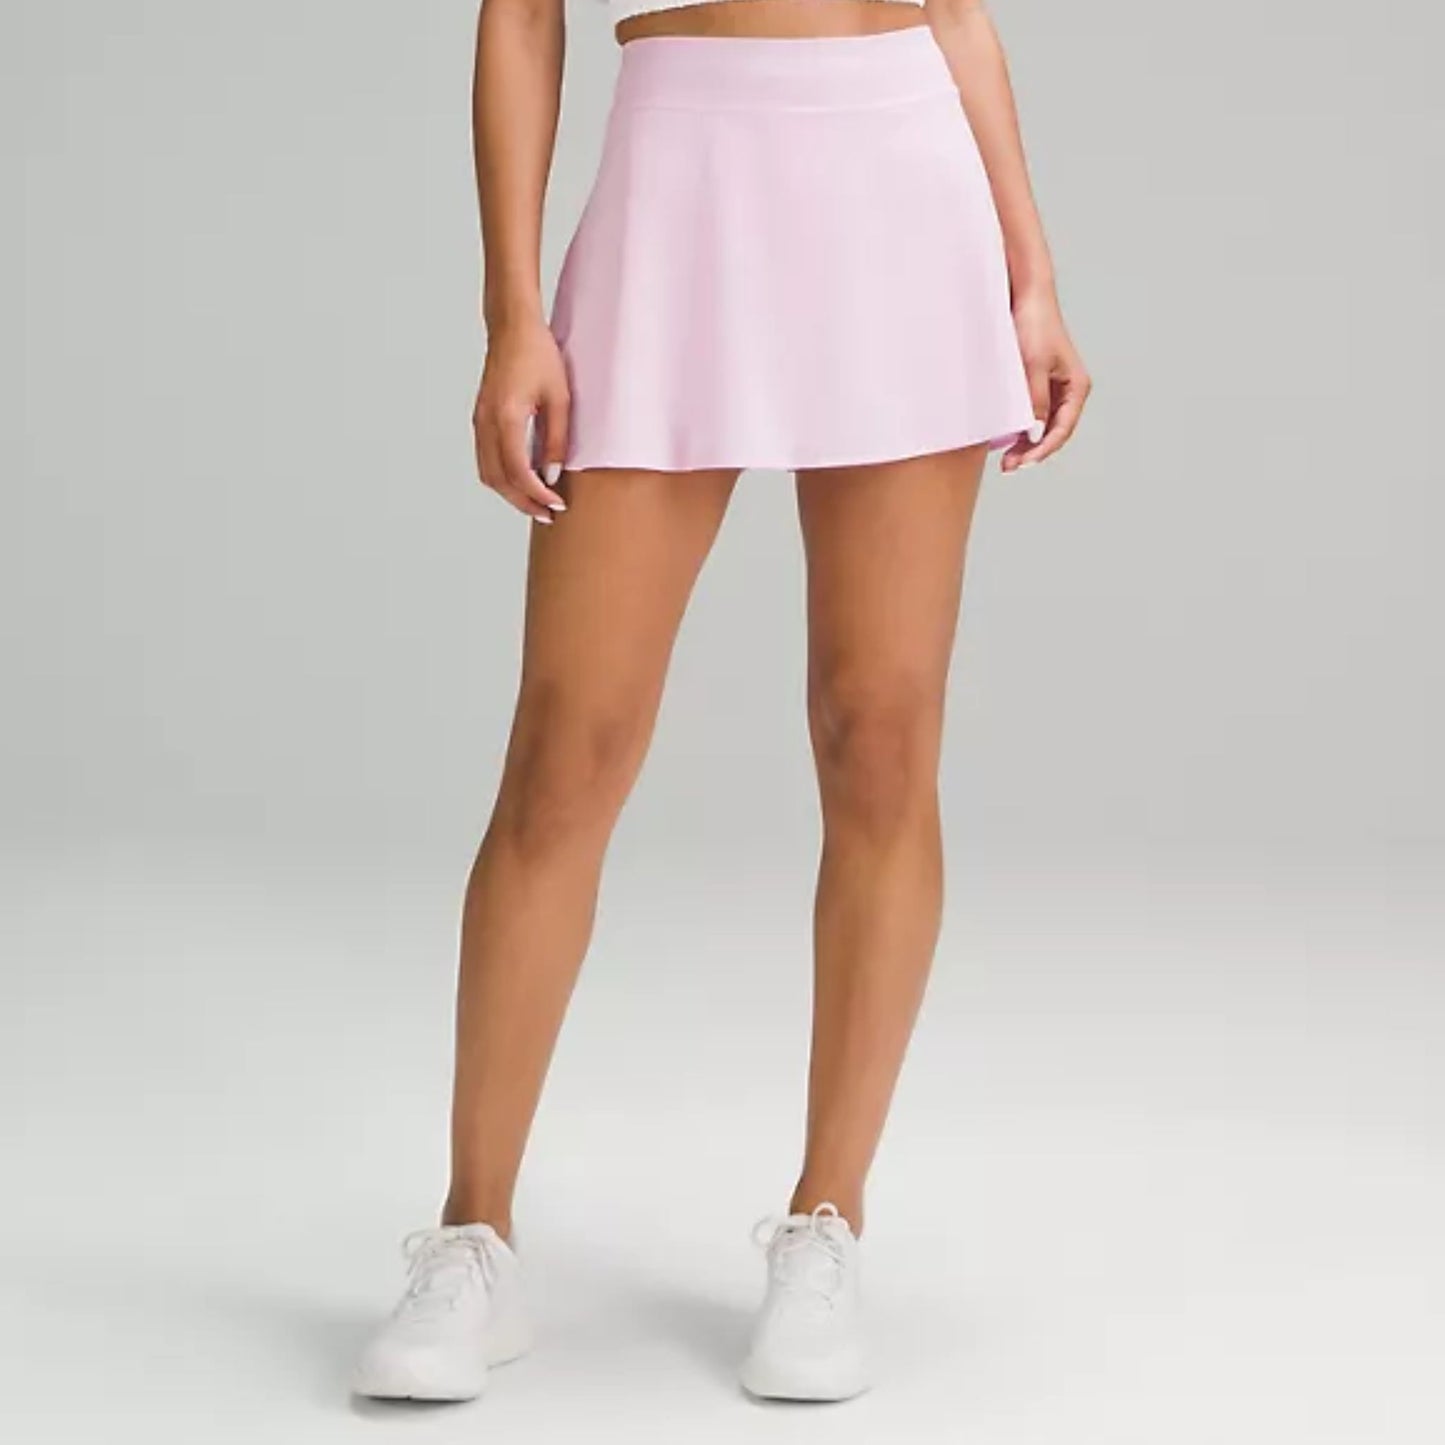 lululemon -  Lightweight High-Rise Tennis Skirt 14" - Vitapink